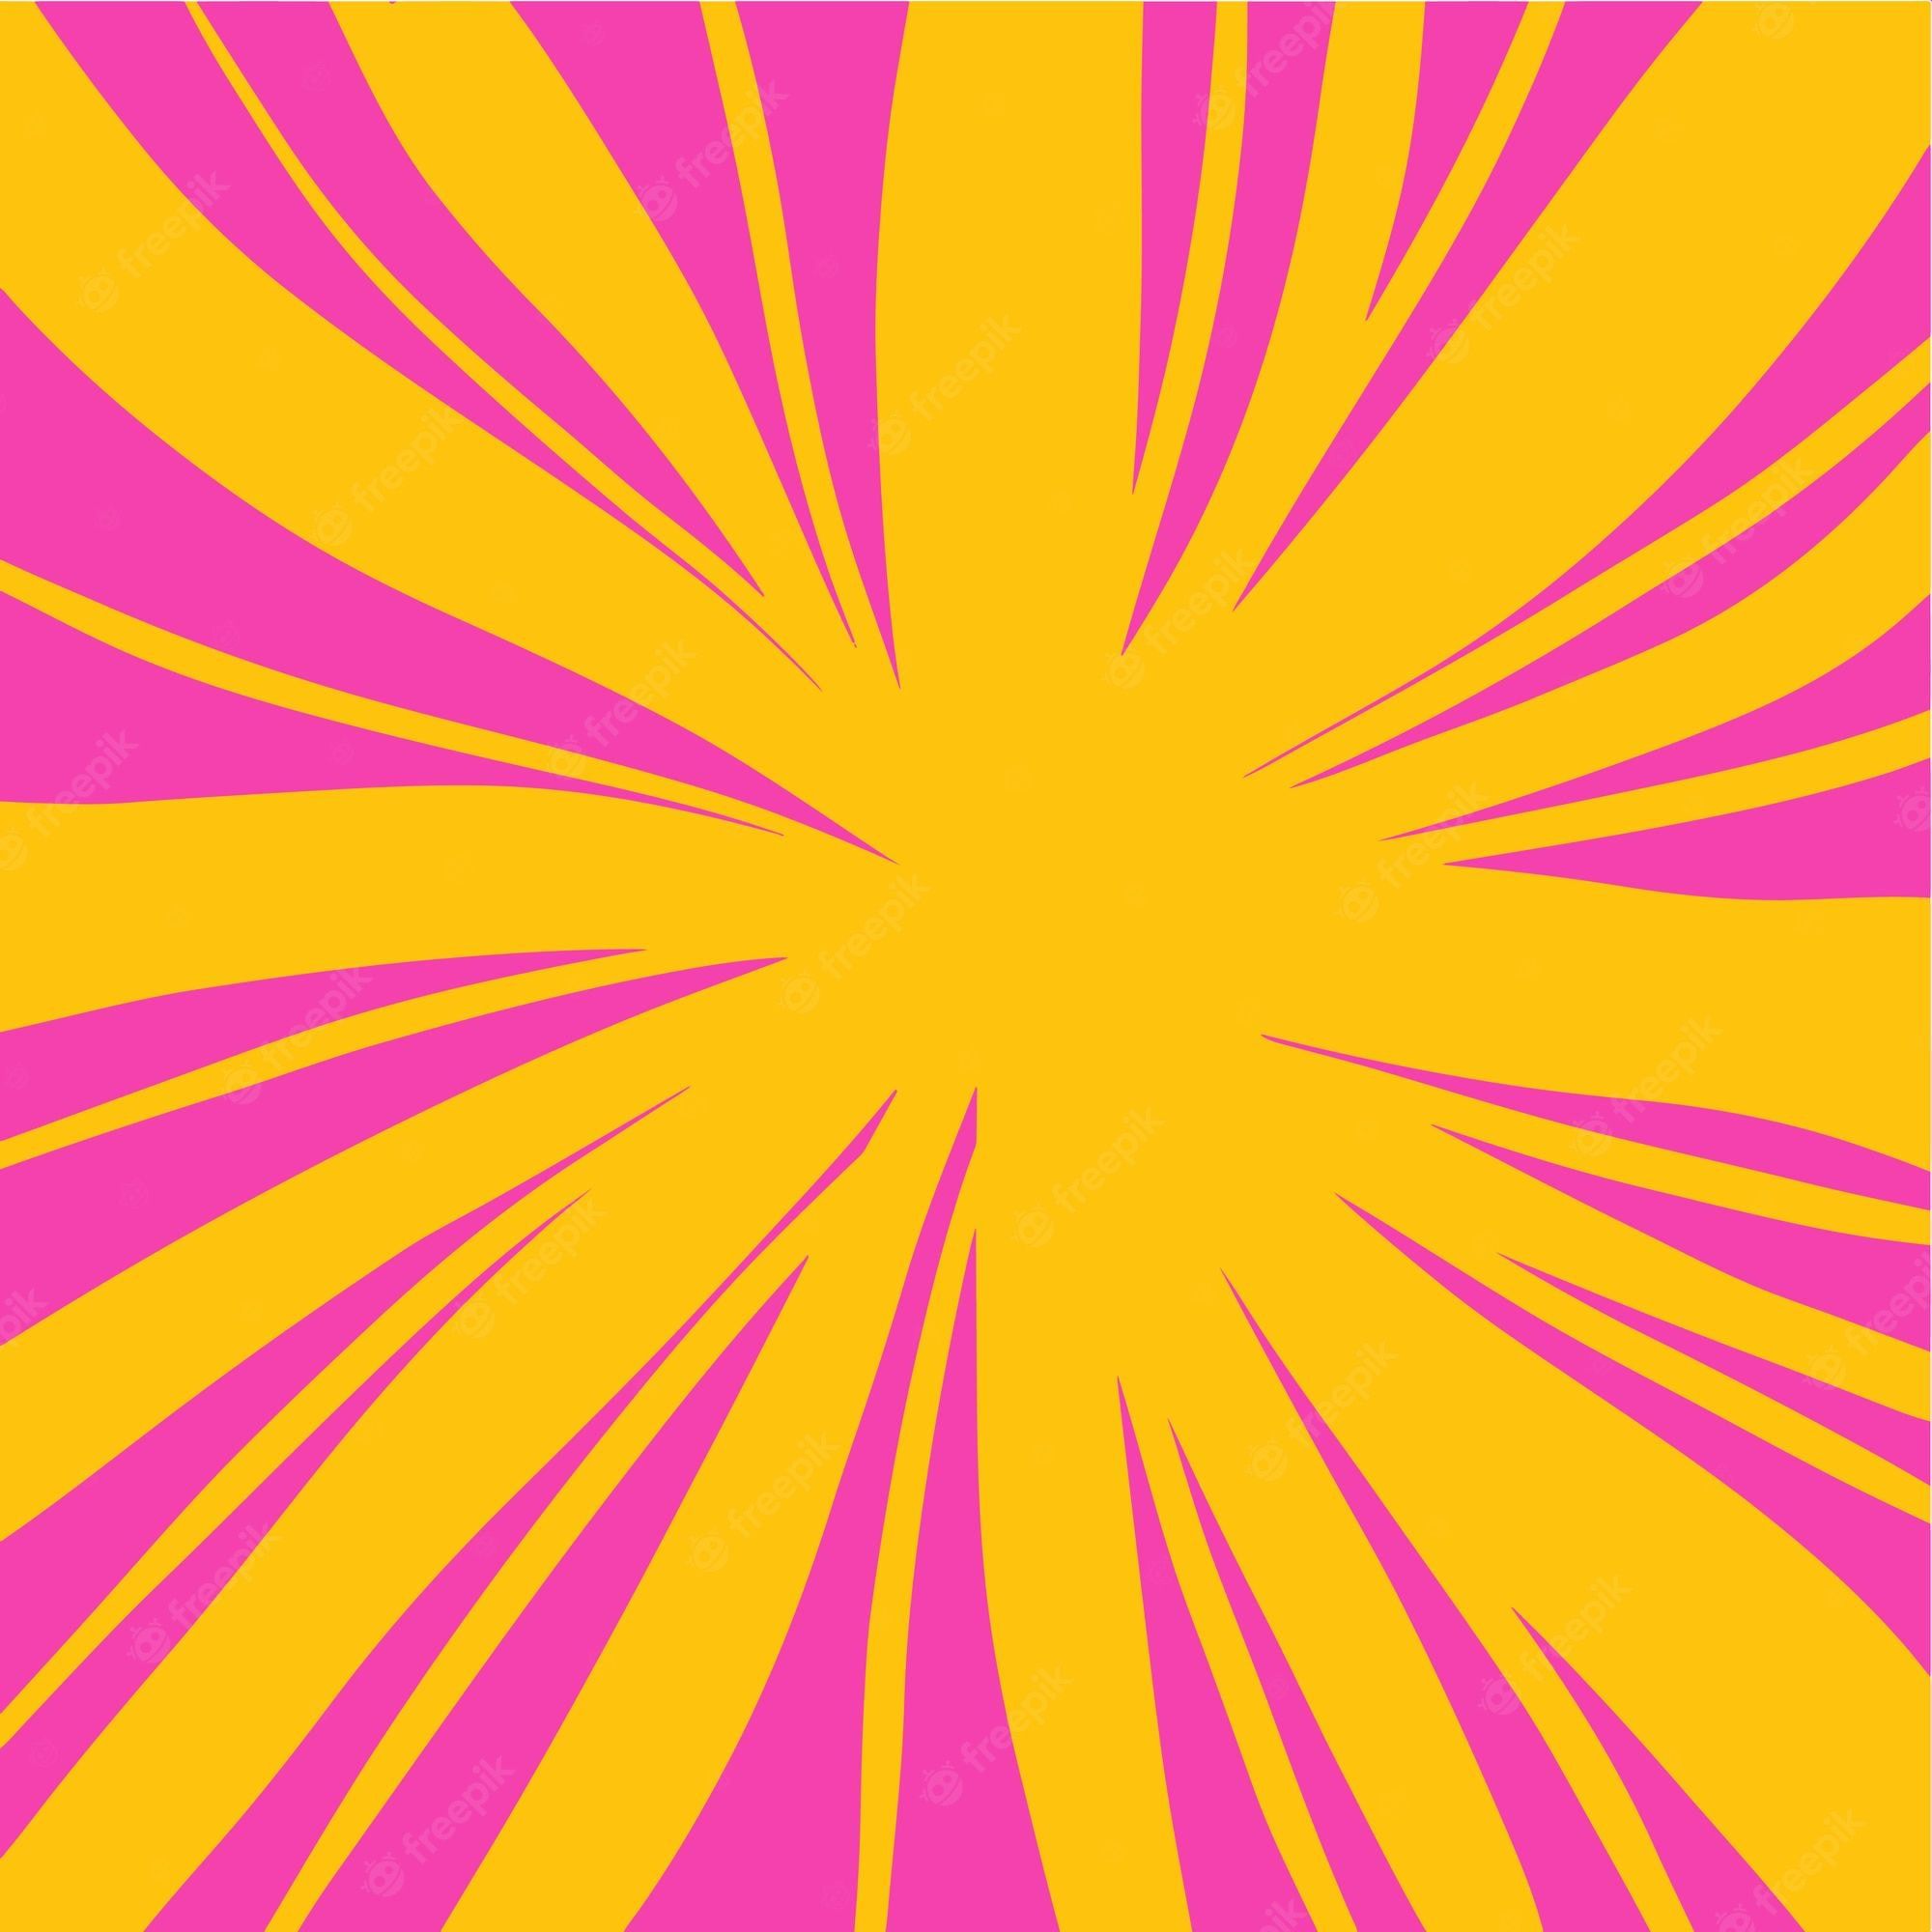 Yellow and pink sunburst background - Neon pink